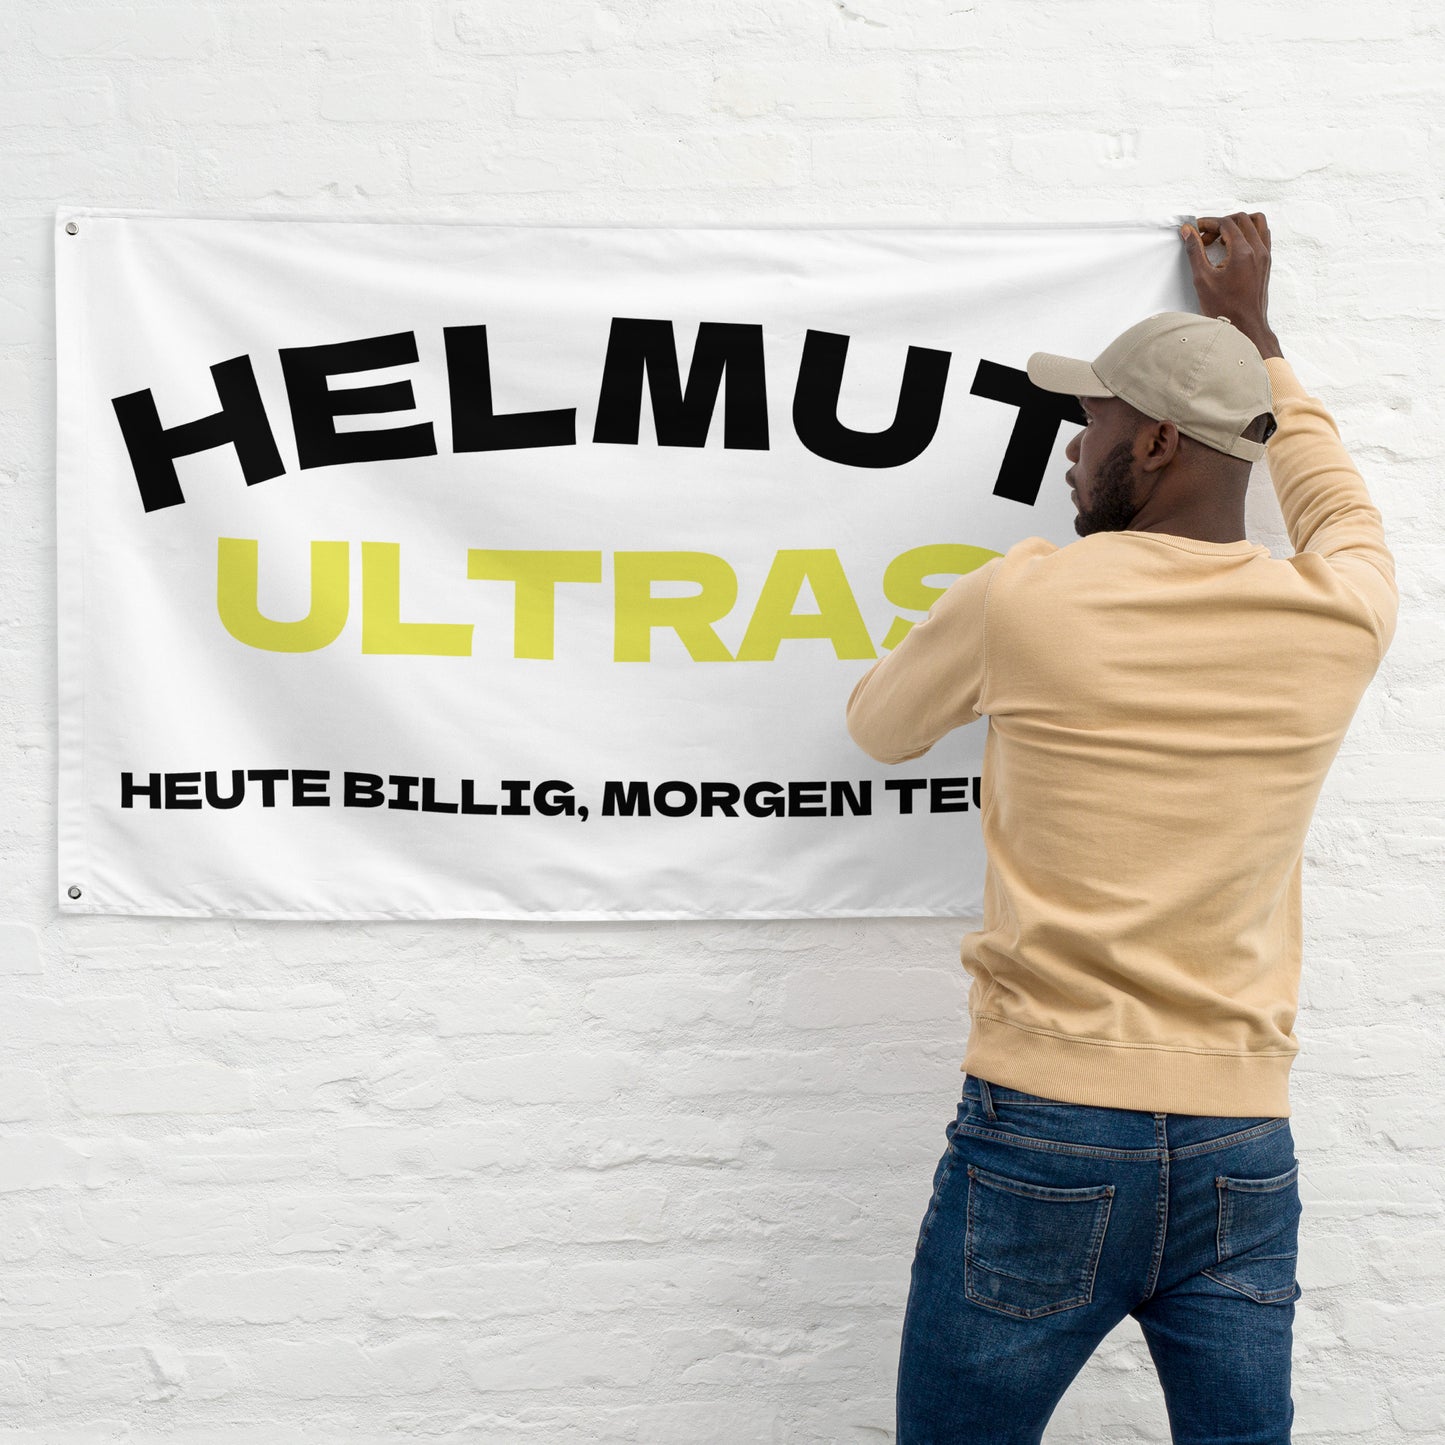 HELMUT ULTRAS - HEUTE BILLIG, MORGEN TEUER Flagge